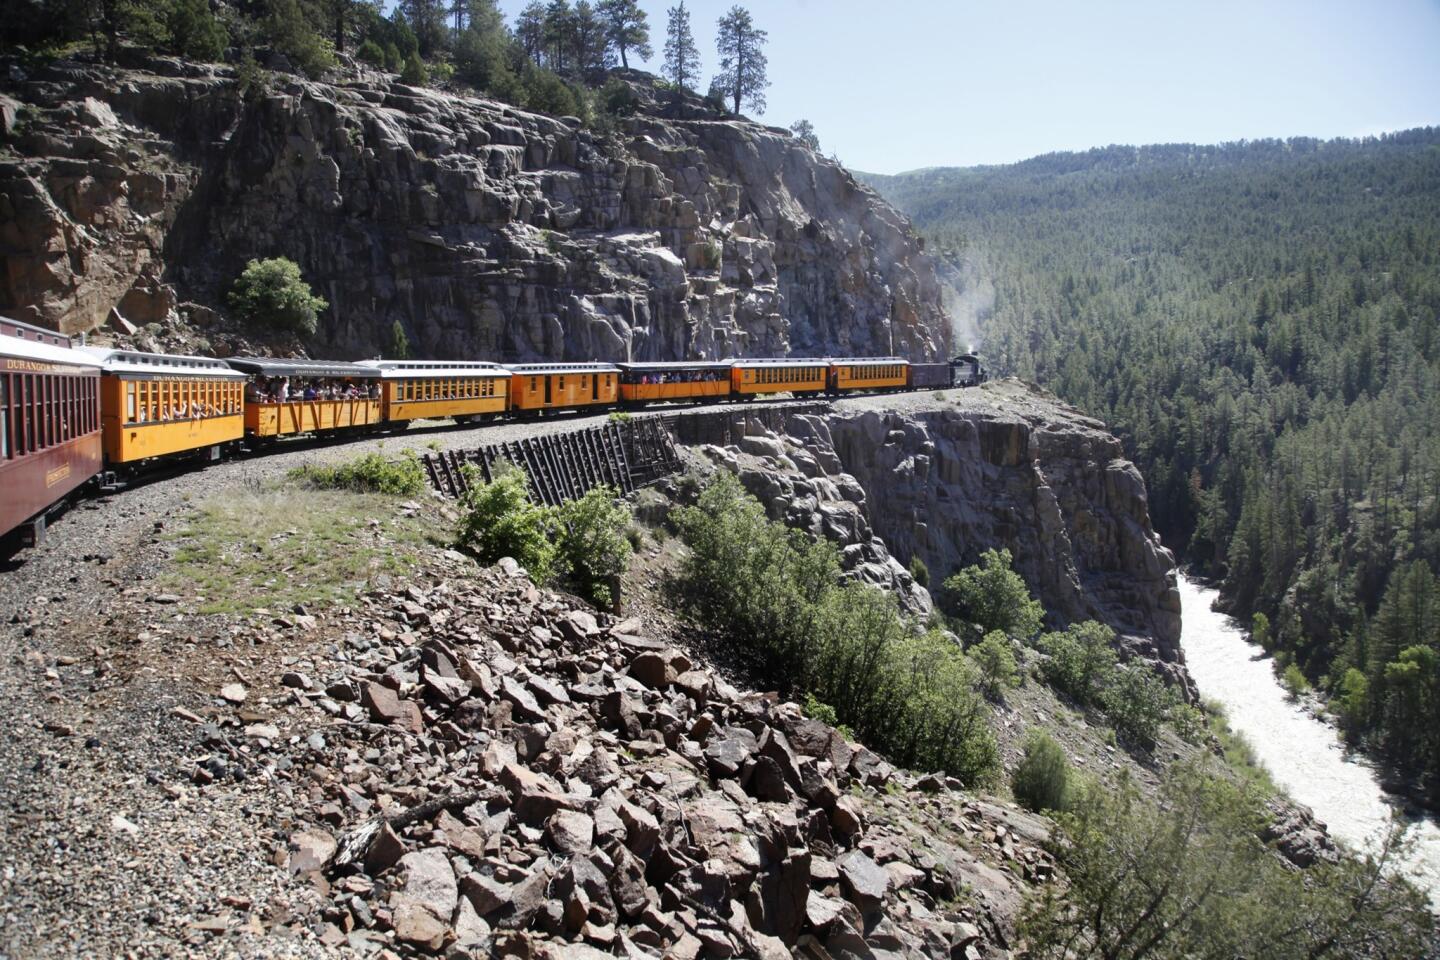 The Durango & Silverton Narrow Gauge Railroad -- formerly the Denver & Rio Grande Railway -- chugs down the grade on the Highline above Animas Canyon and the rushing river below.